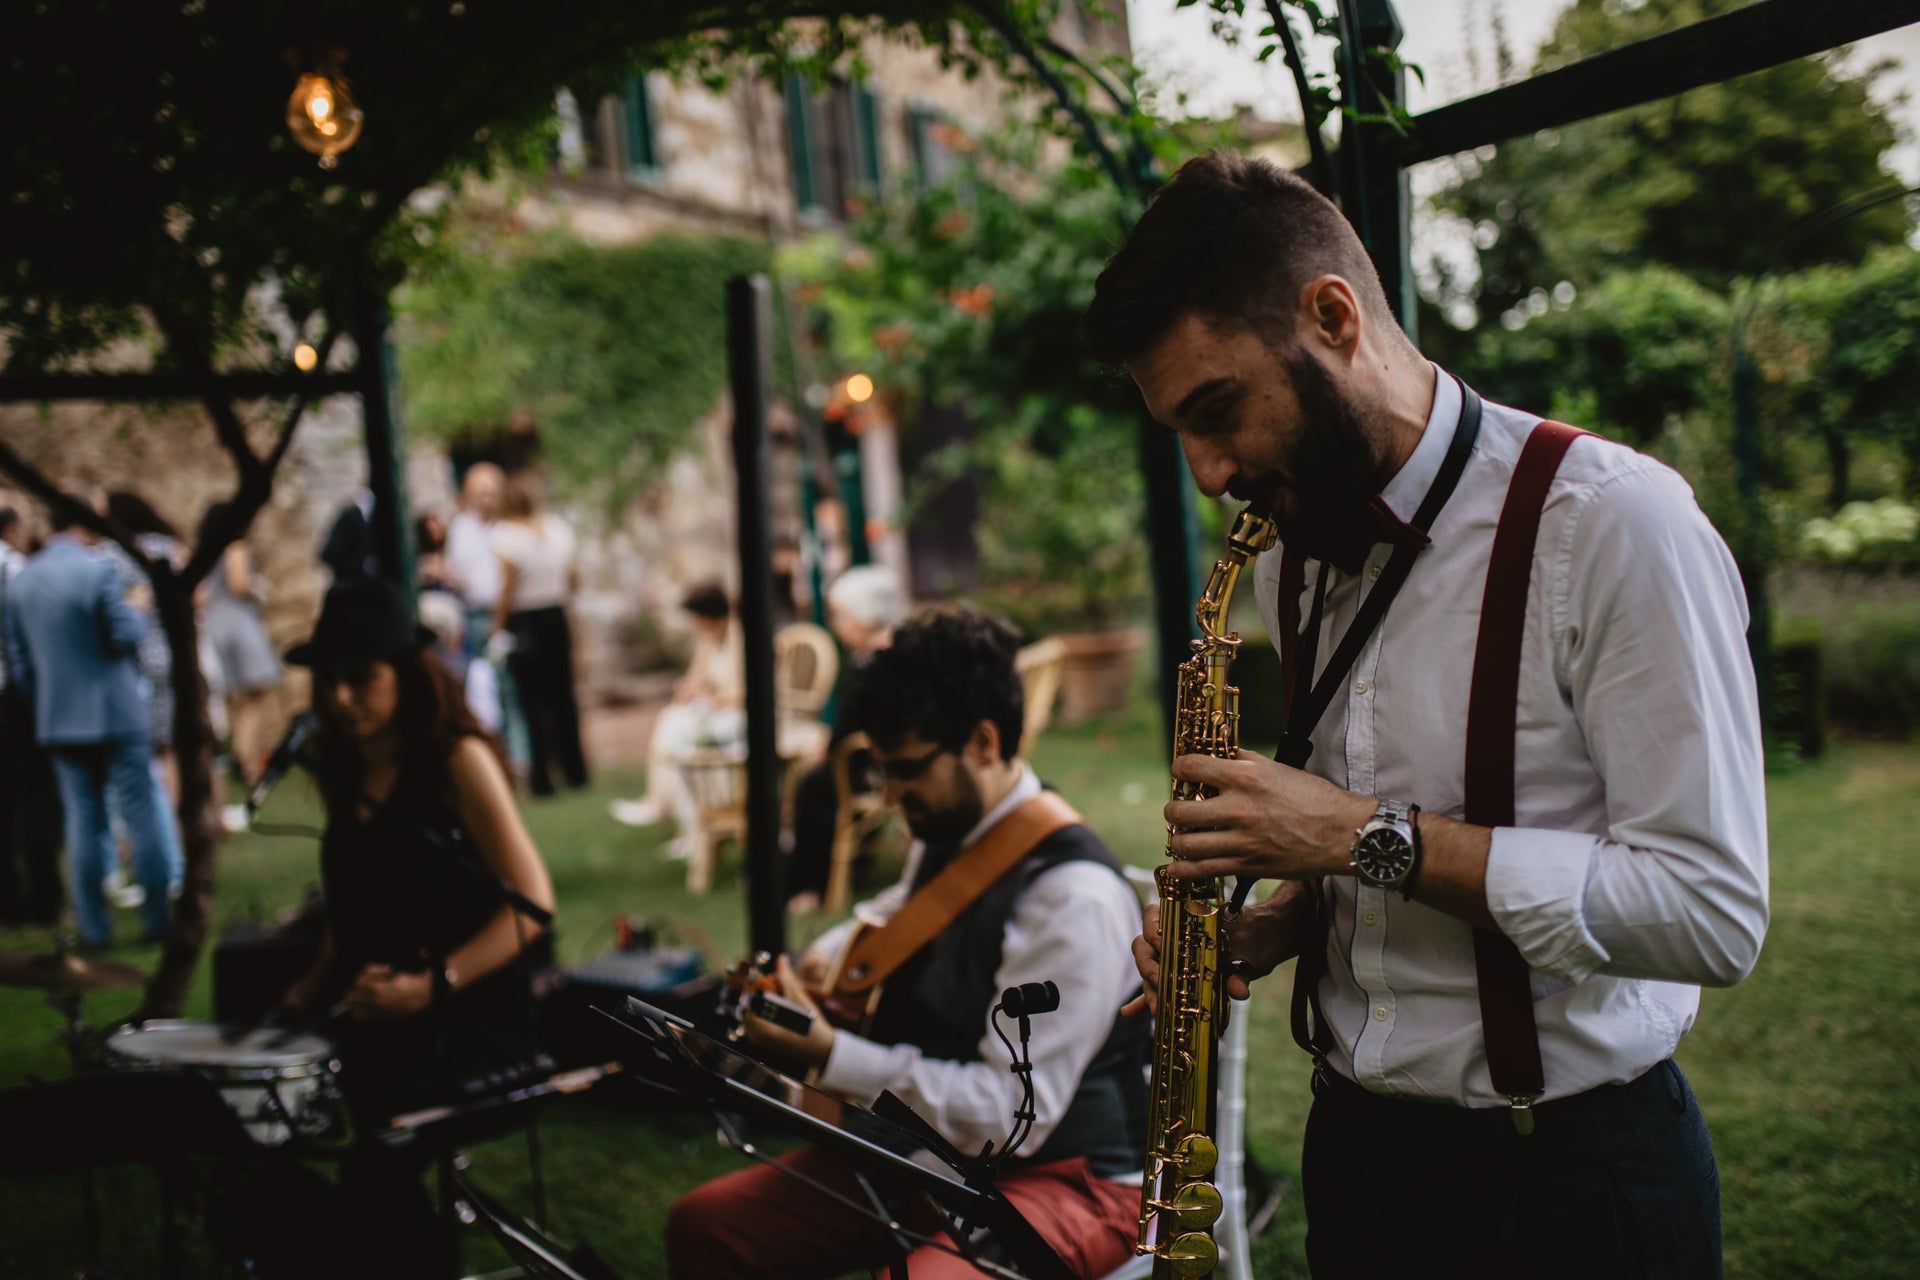 The Tuscany Swing Band